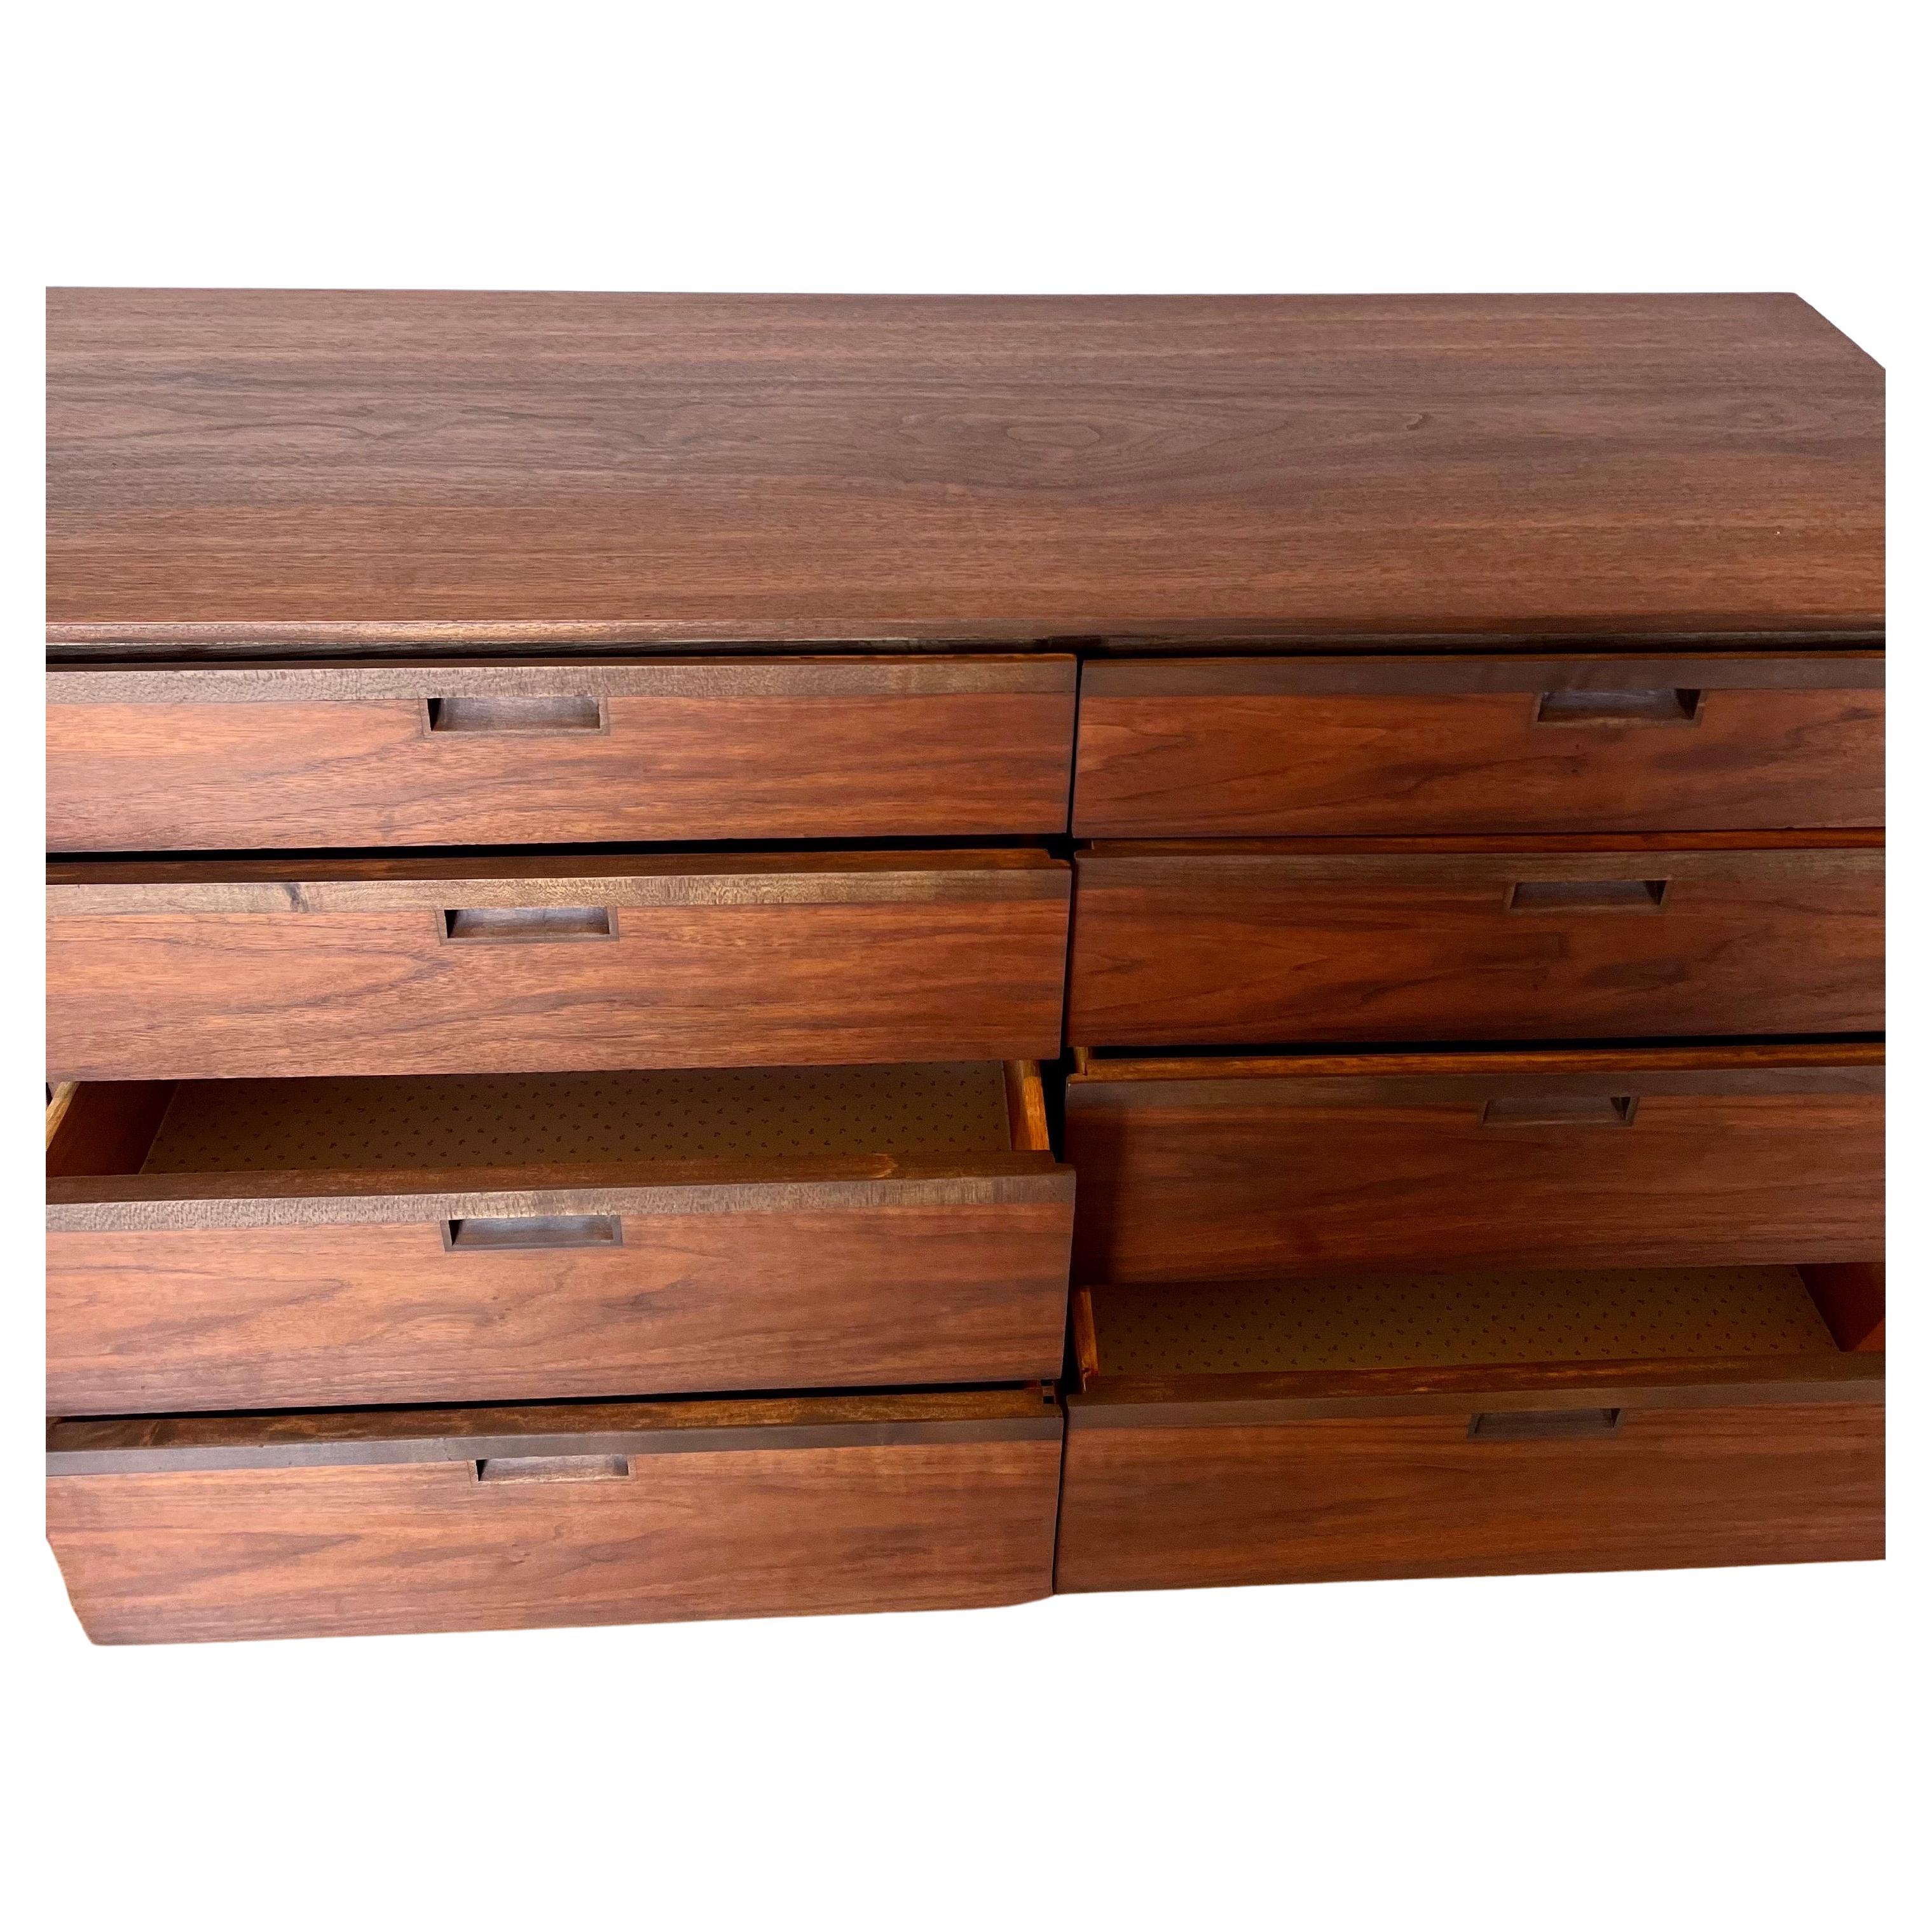 Beautiful elegant high-quality dresser 11 drawers, freshly refinished double door lots of storage mix woods, beautiful elegant.